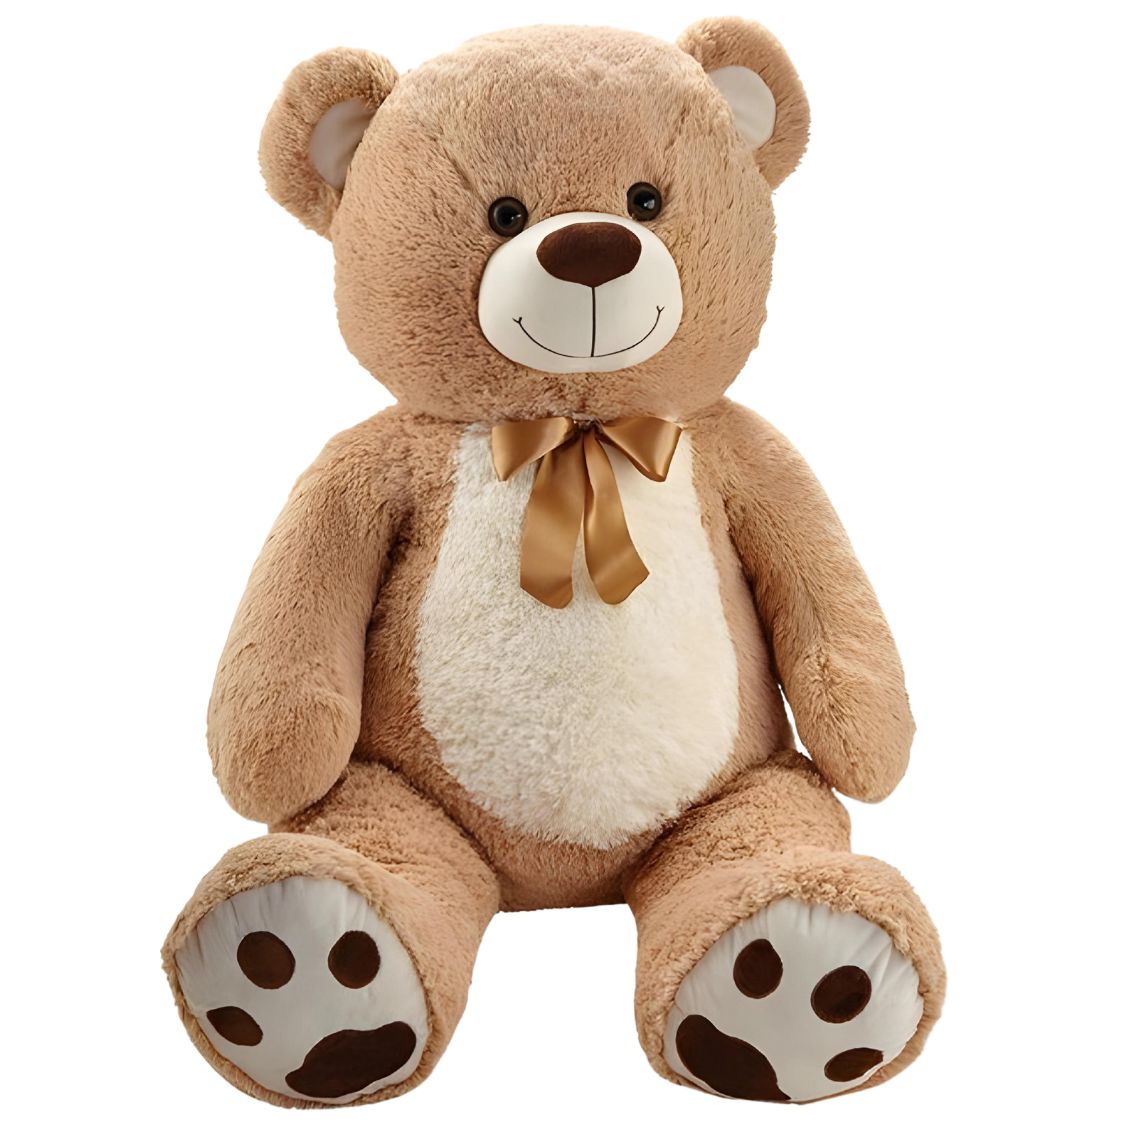 Lifelike Teddy Bear Plush Stuffed Animal